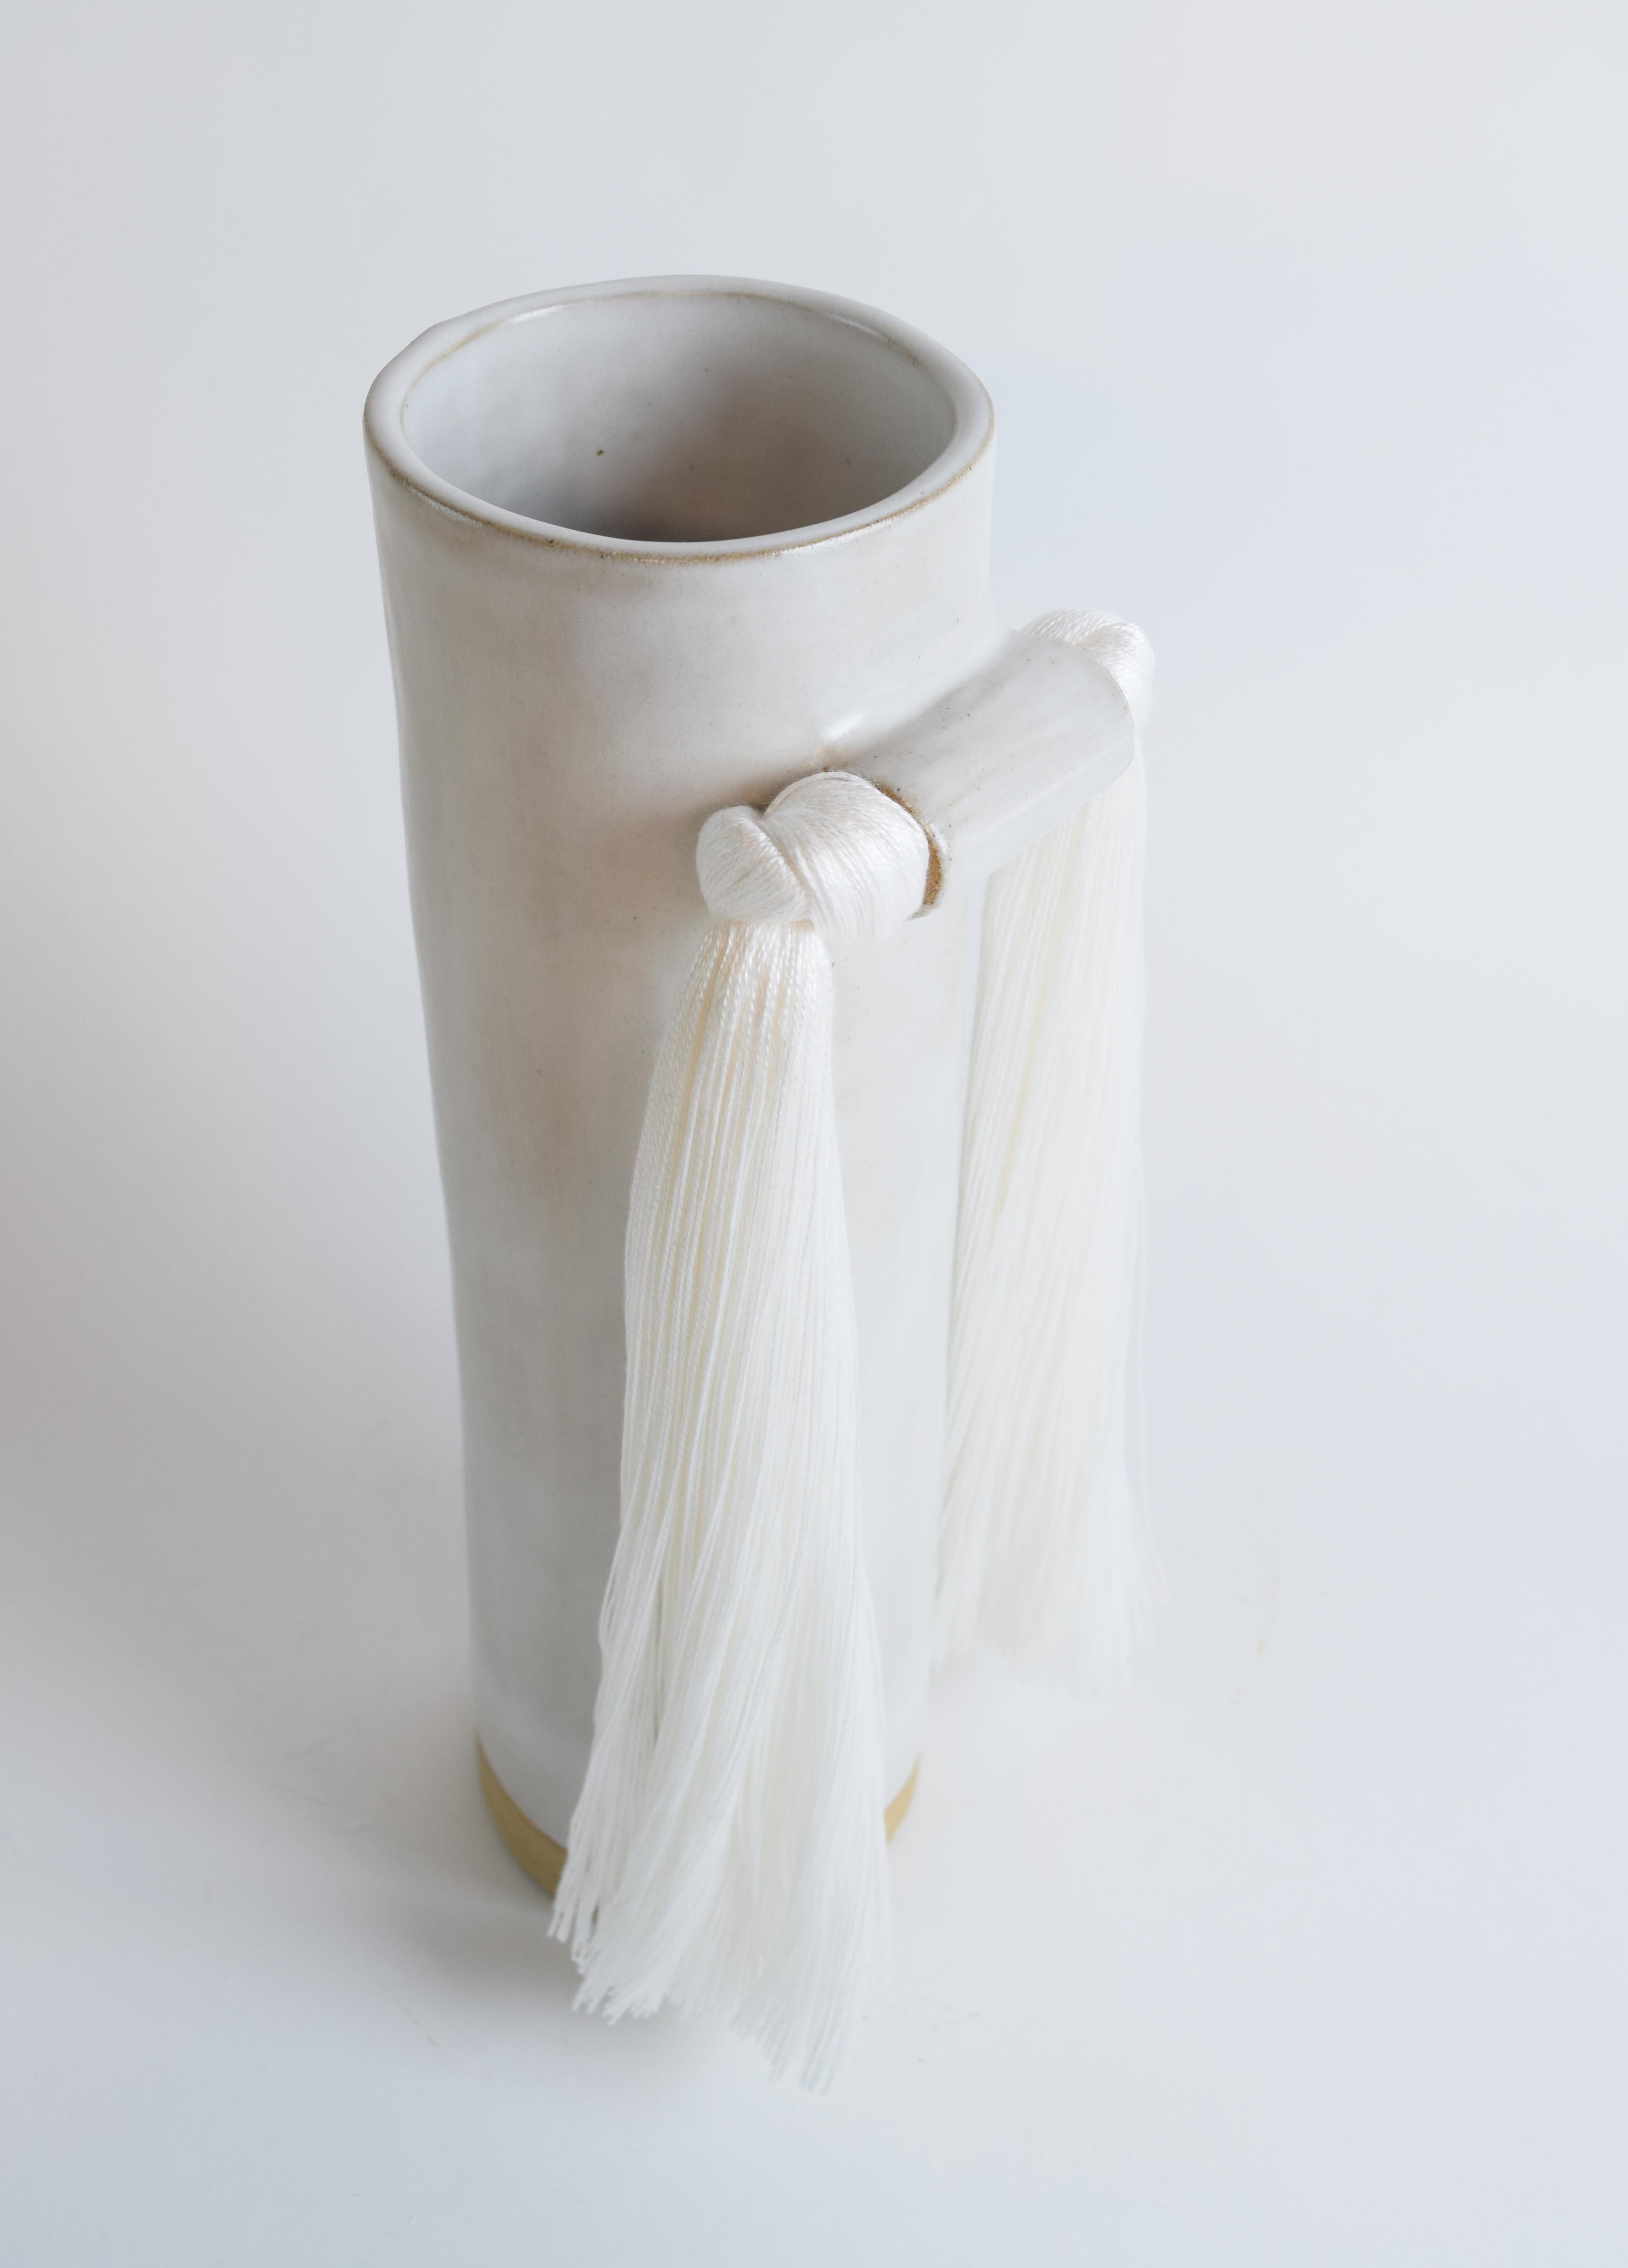 American Handmade Ceramic Vase #531 in Satin White Glaze with White Tencel Fringe Detail For Sale